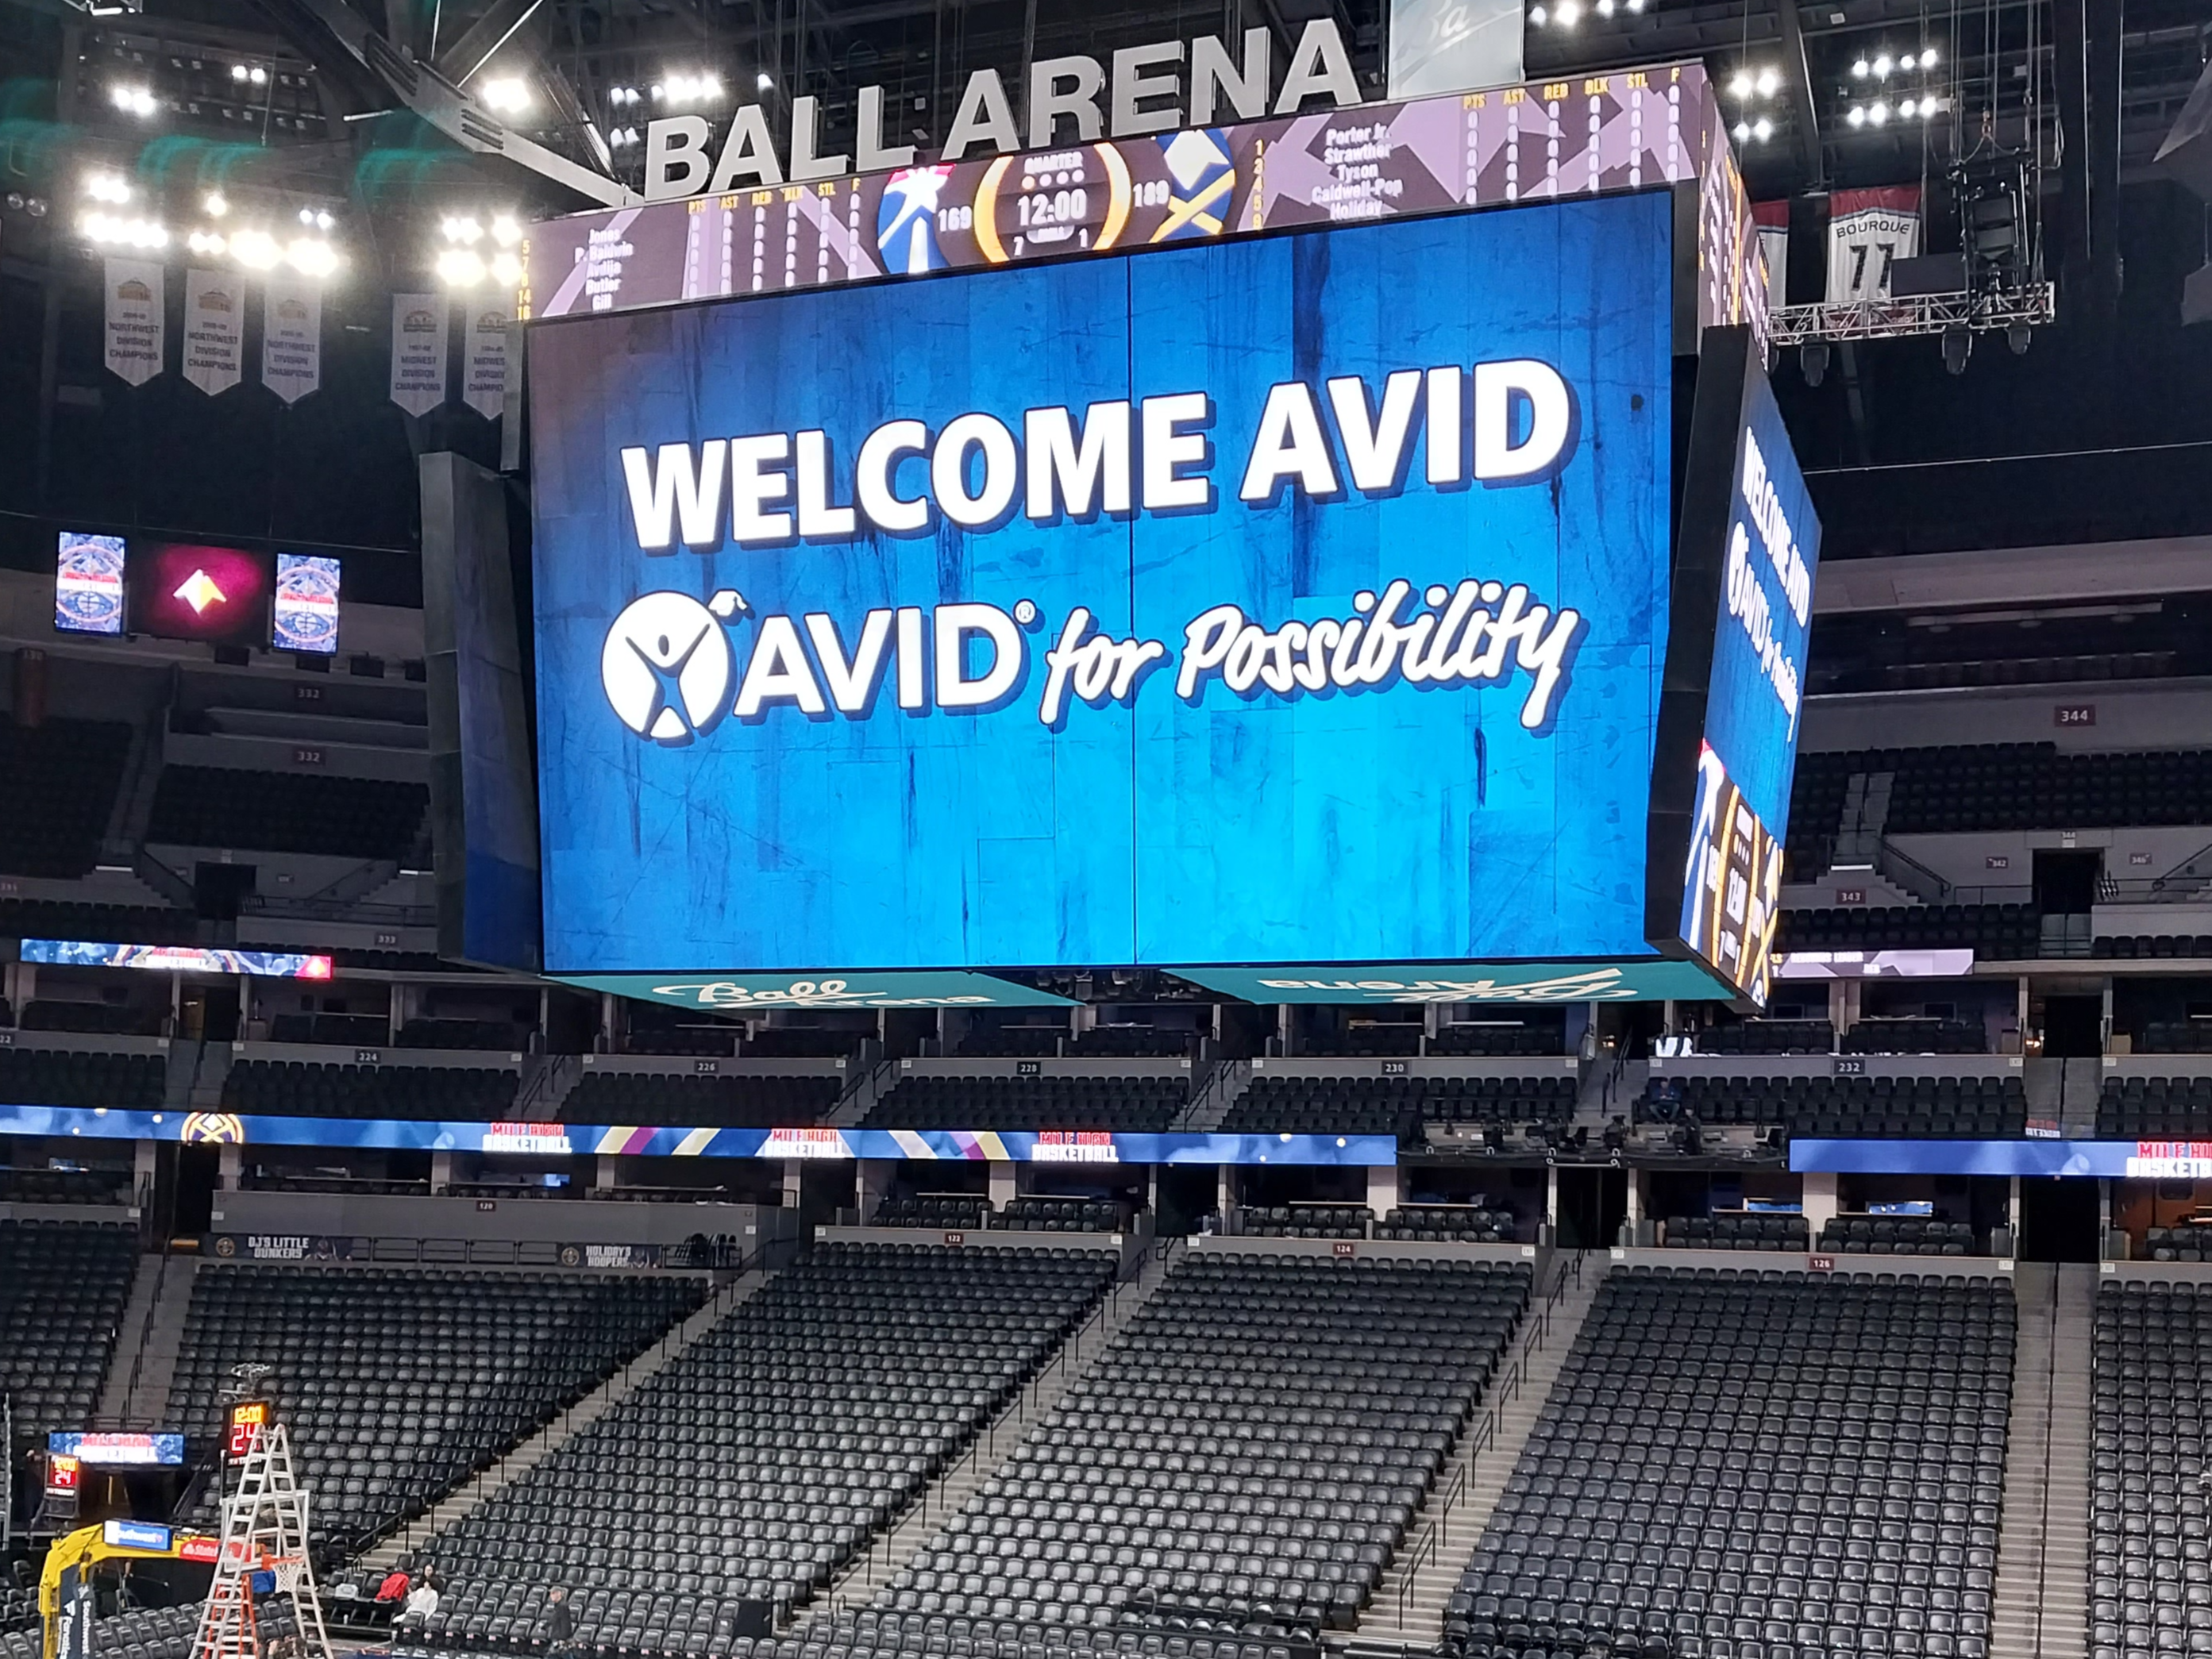 Big screen at Ball Arena welcoming AVID students from DPS